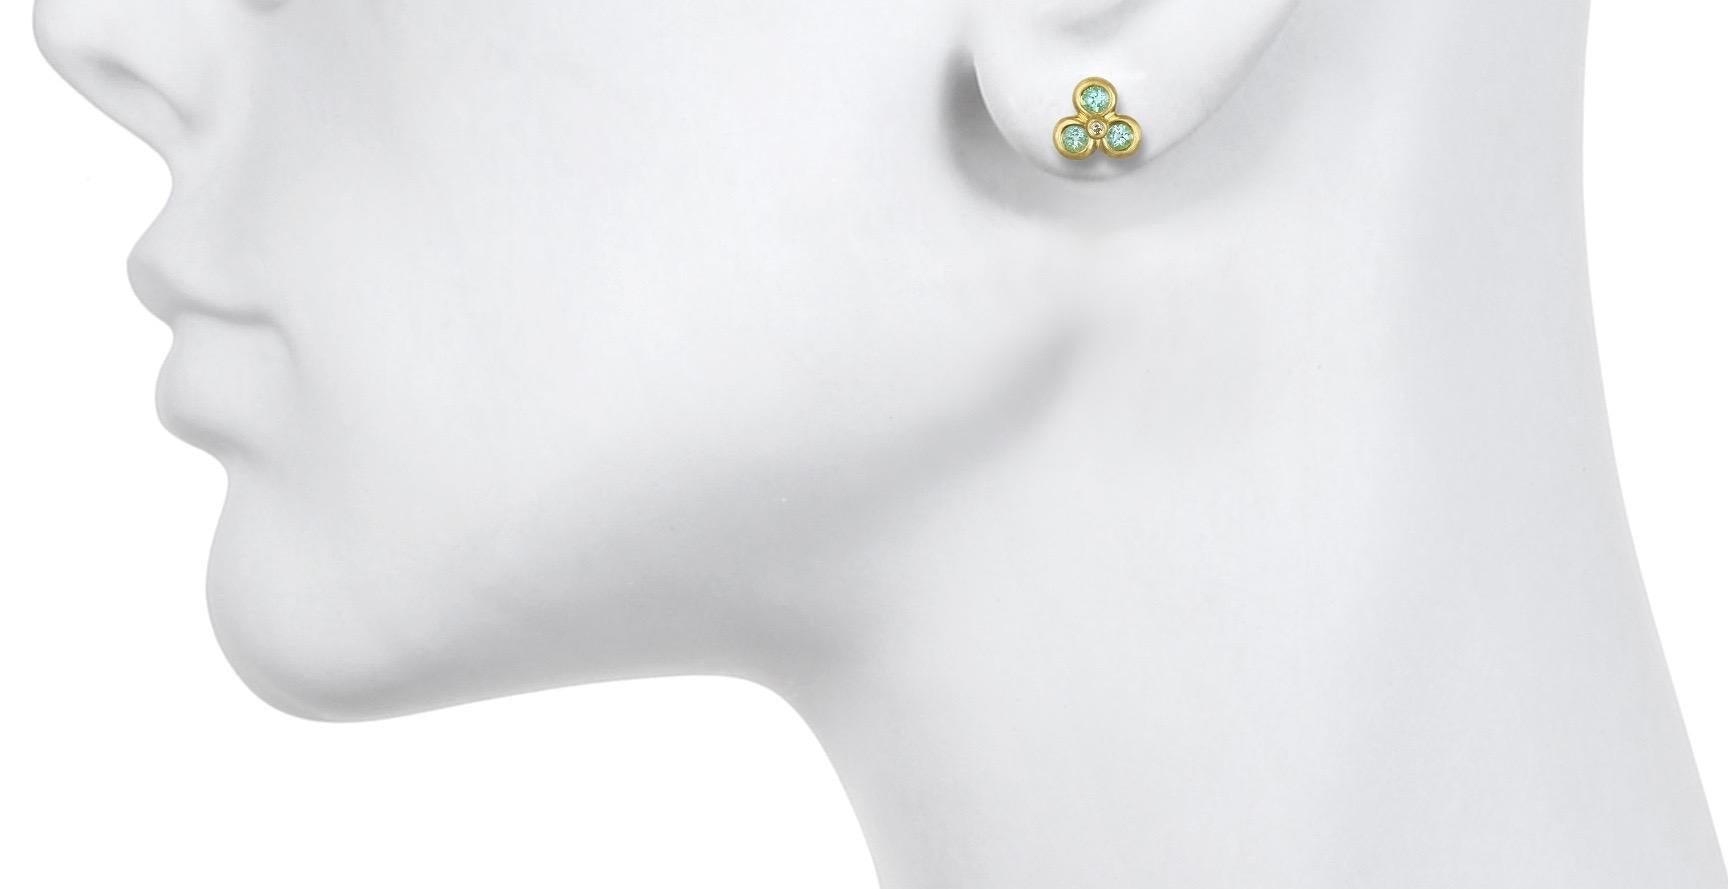 Faye Kim 18K Green Gold Stud Earrings set with brilliant Paraiba Tourmalines and White Diamonds.
Diameter .312